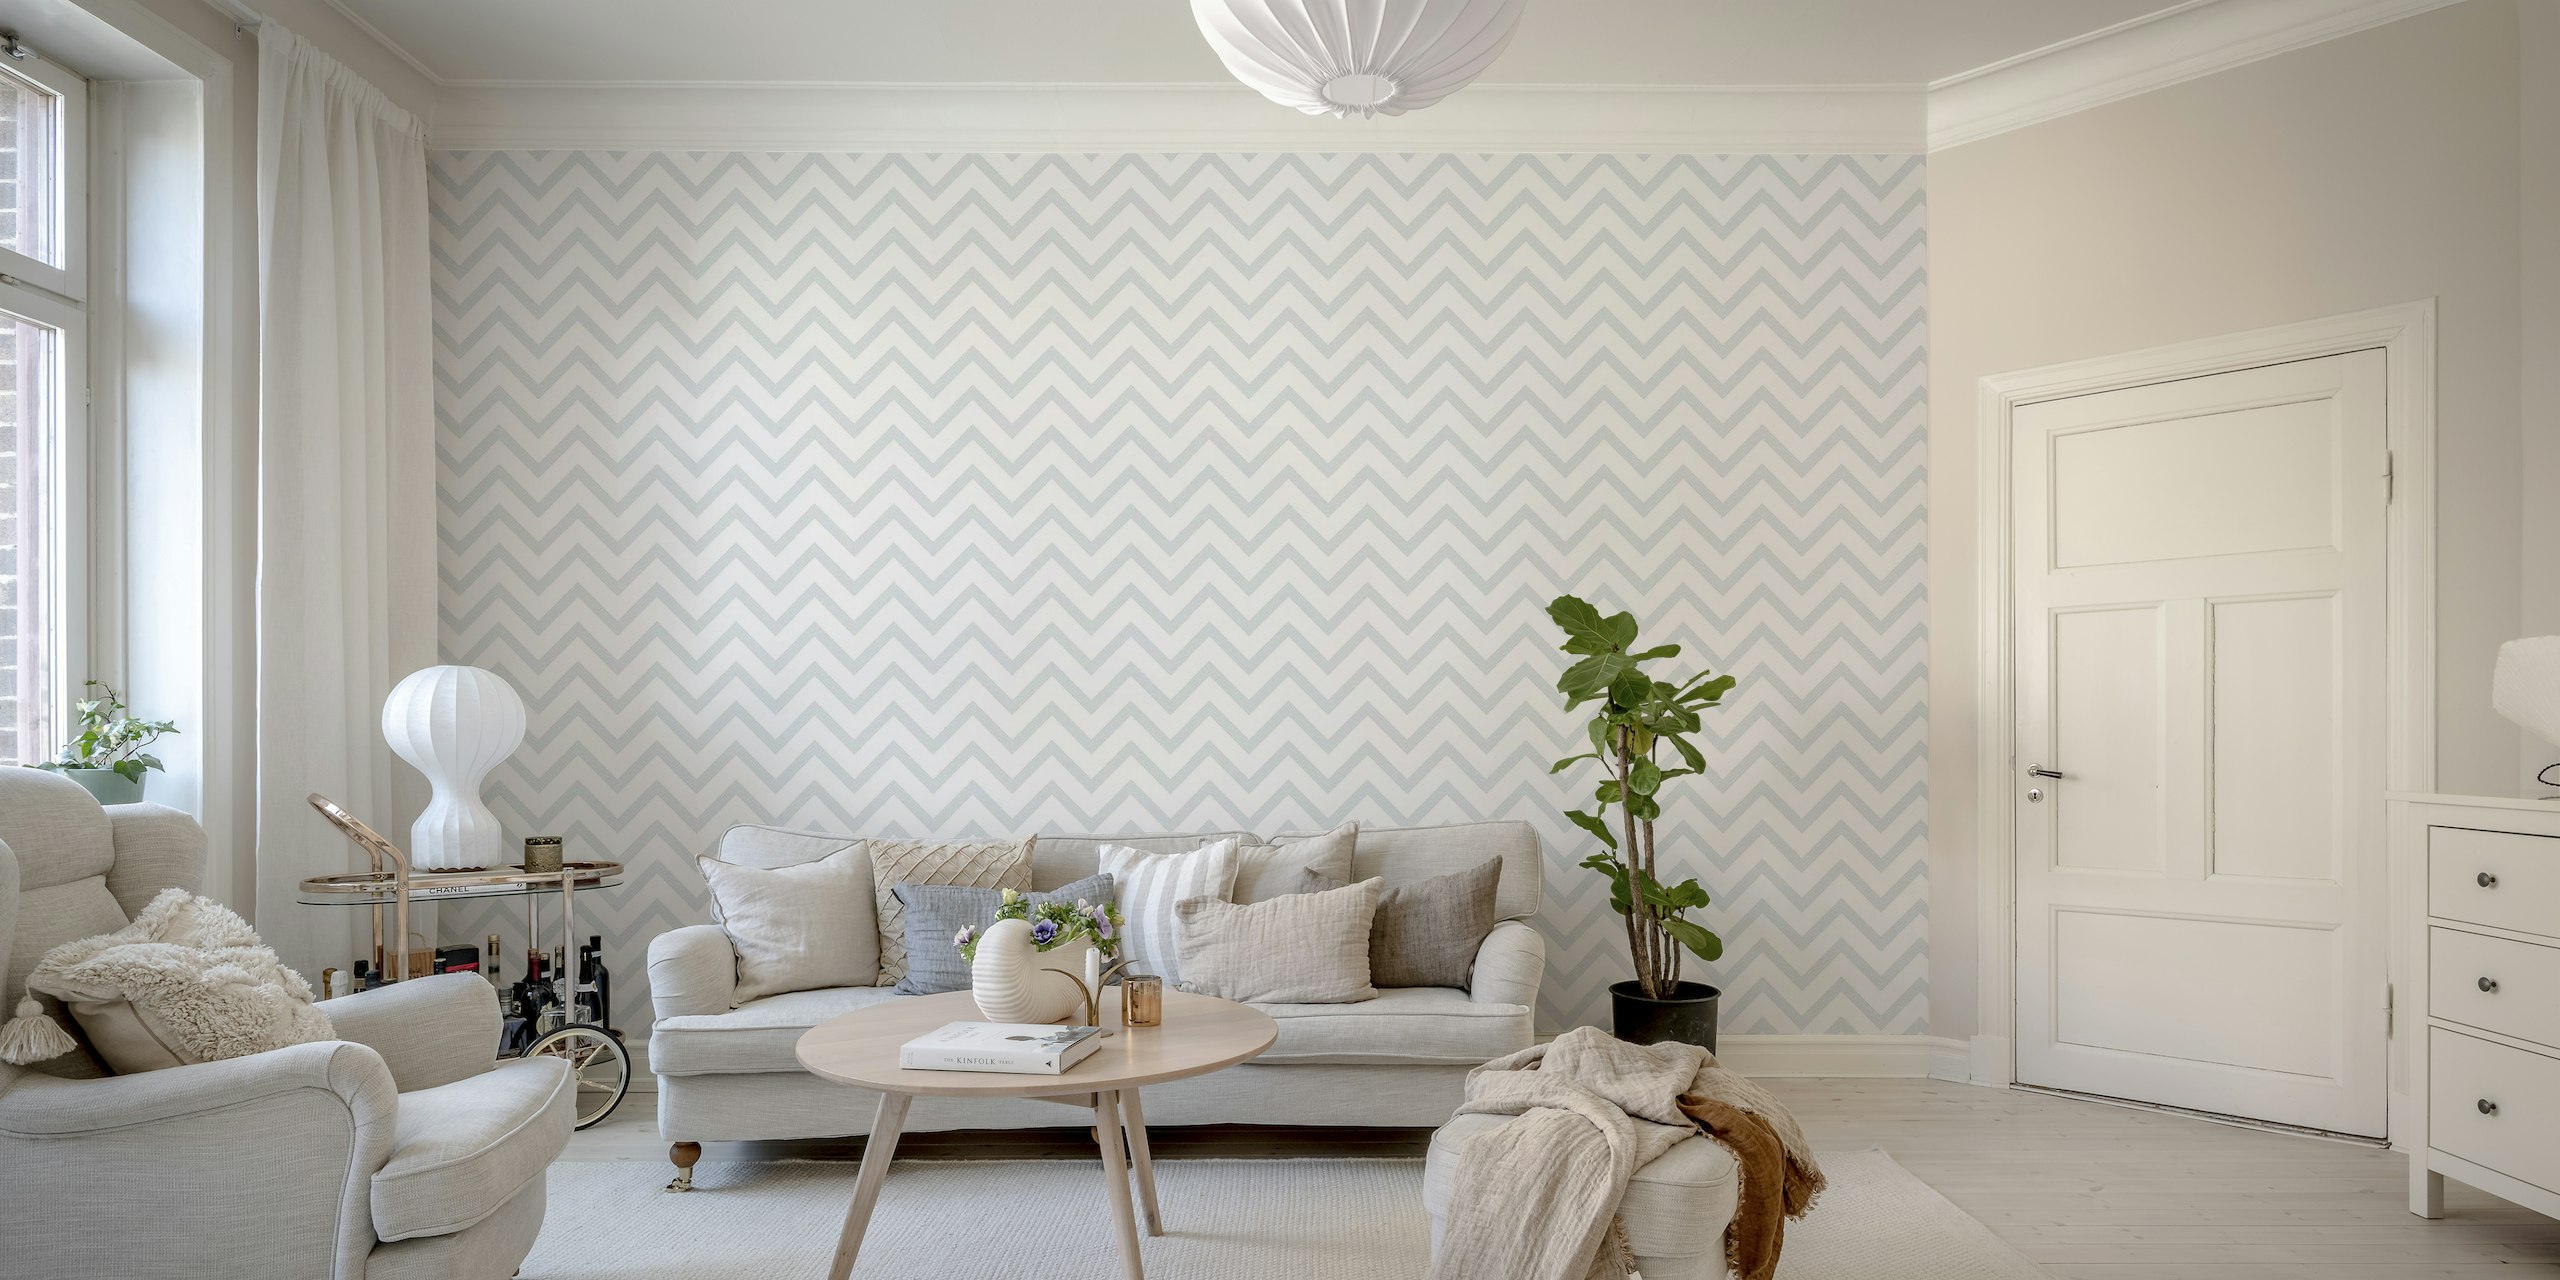 Elegant grey chevron pattern wall mural for sophisticated interior decor